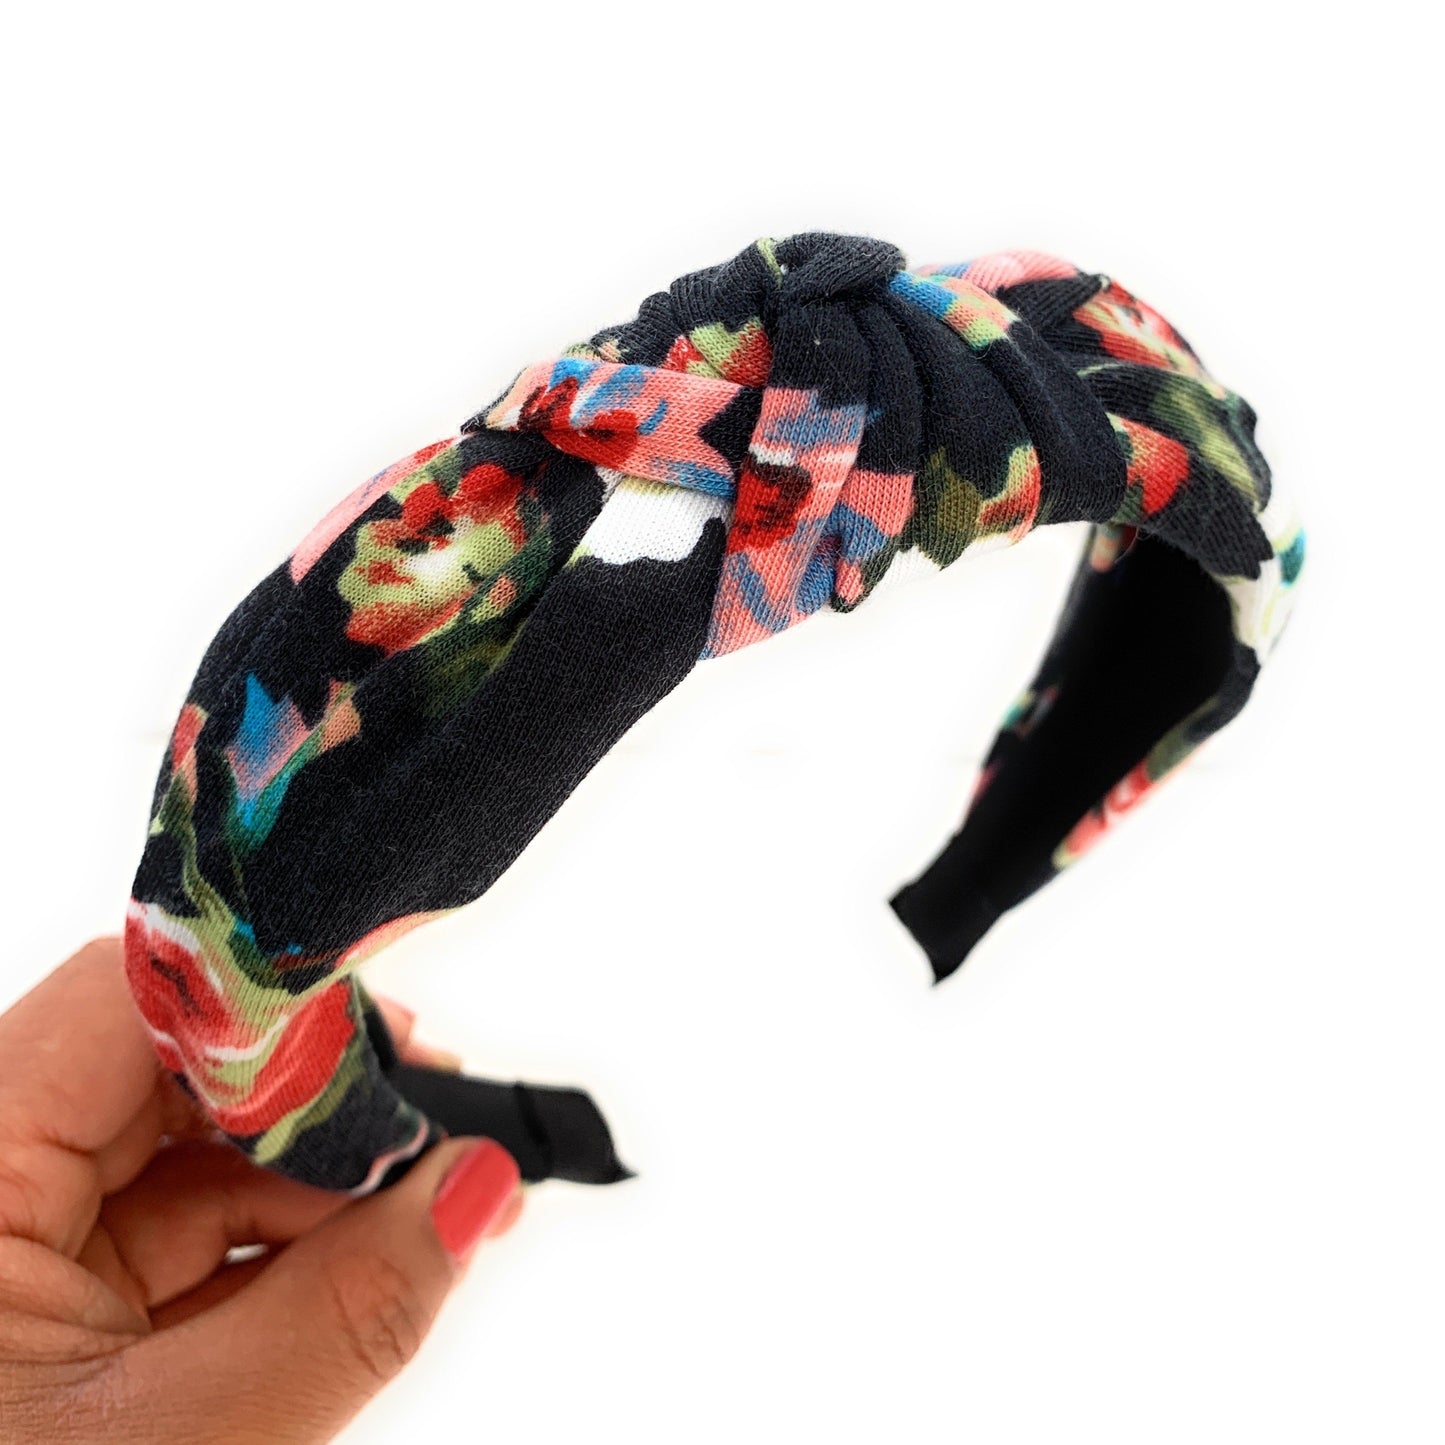 Floral Top Knot Headband